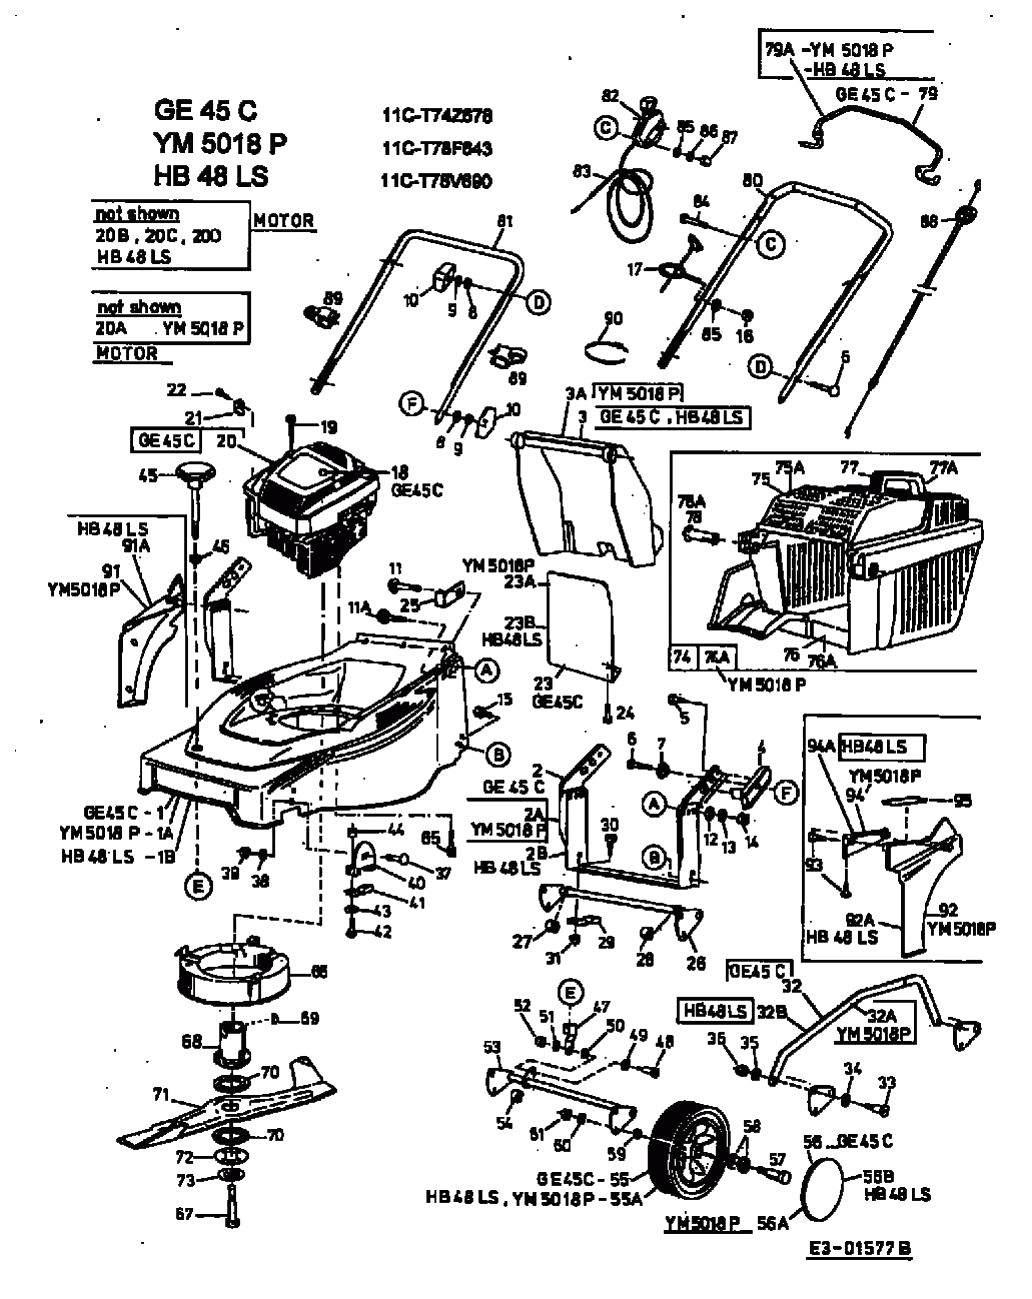 MTD Артикул 11C-T74Z678 (год выпуска 2001). Основная деталировка